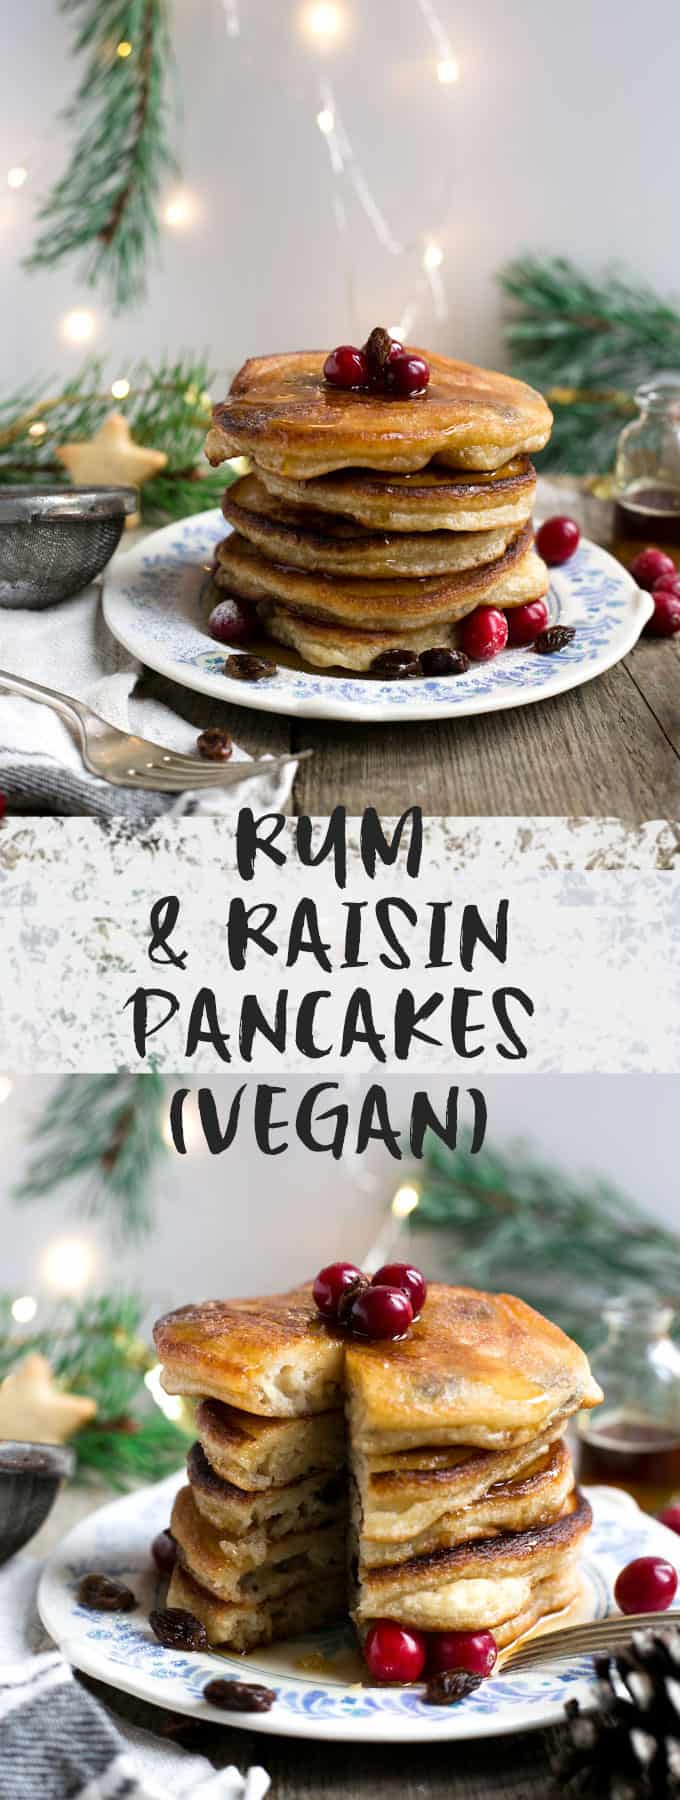 Rum & raisin pancakes, soft, fluffy and festive treat for Christmas morning! #vegan #pancakes #christmas | via @annabanana.co